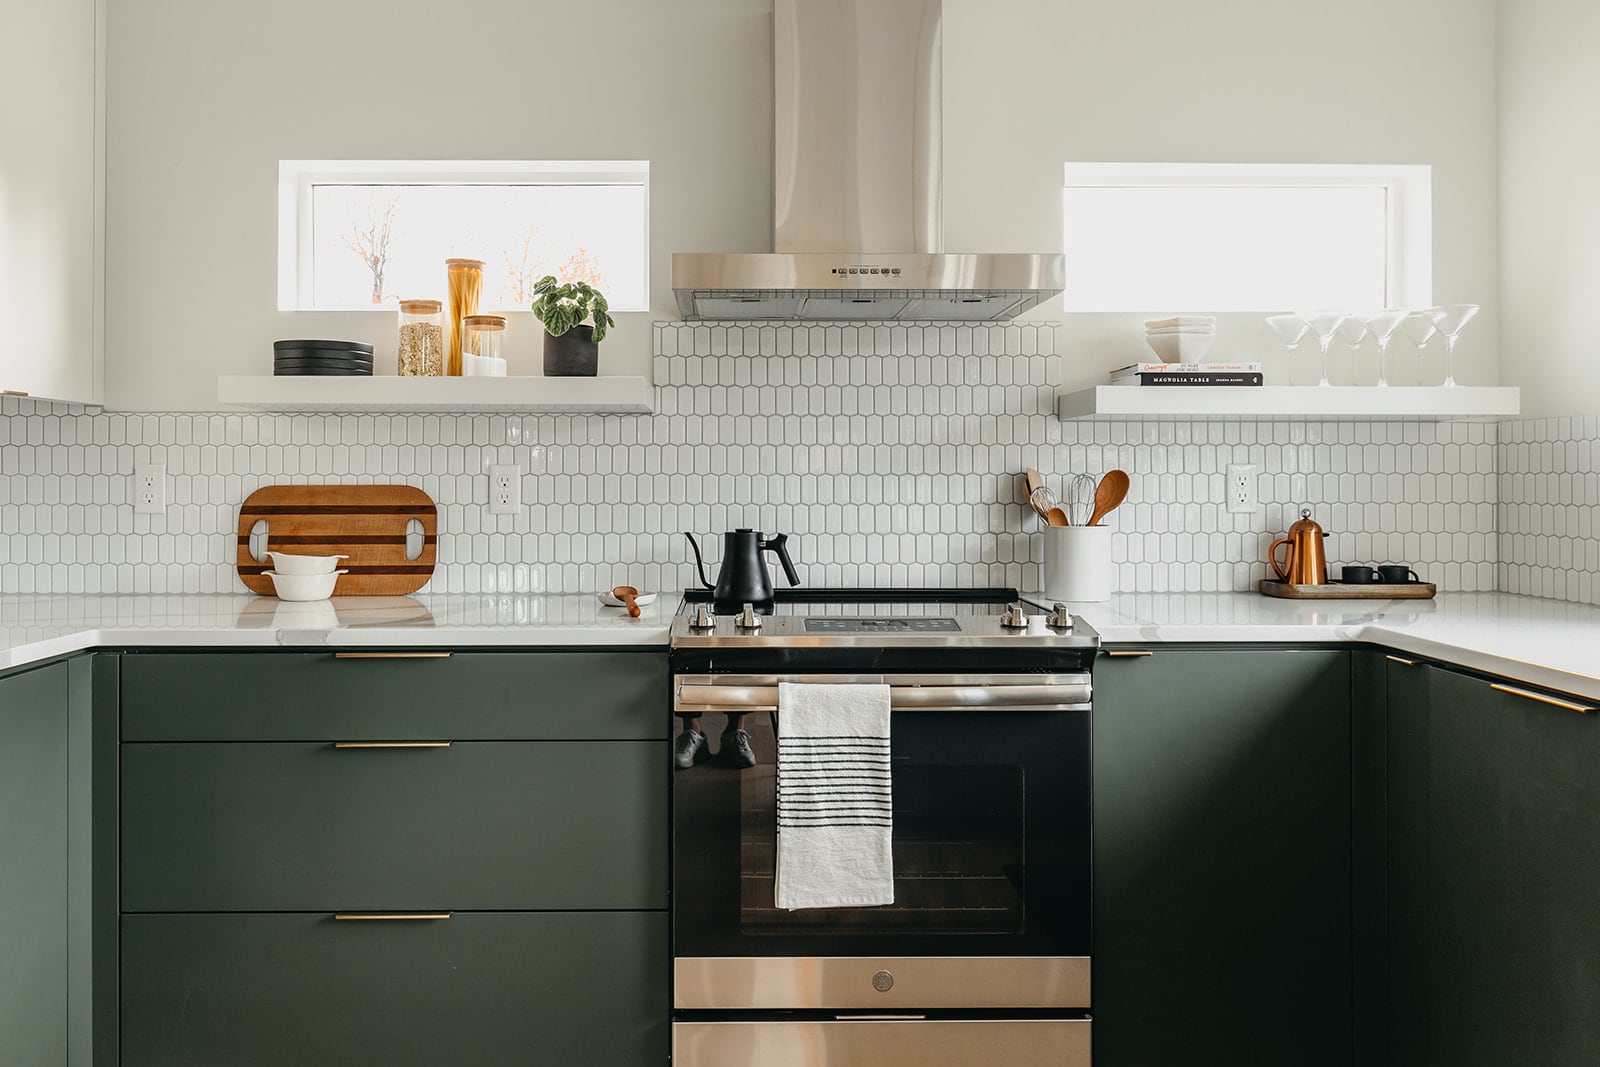 green kitchen cabinets with white quartz countertops and full height white tile backsplash